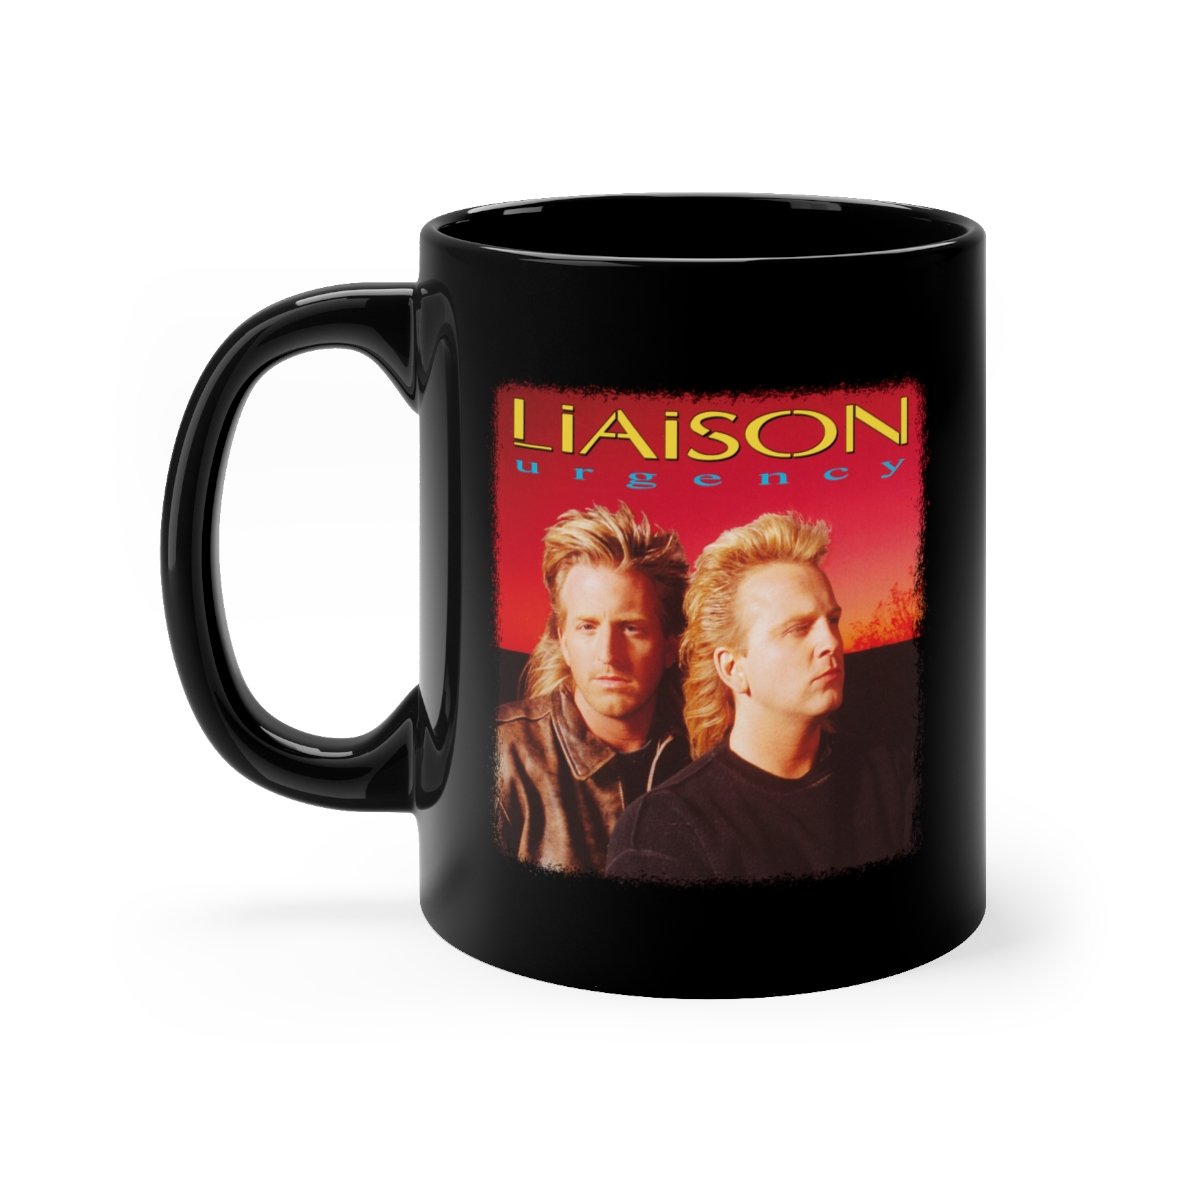 Liaison – Urgency 11oz Black mug